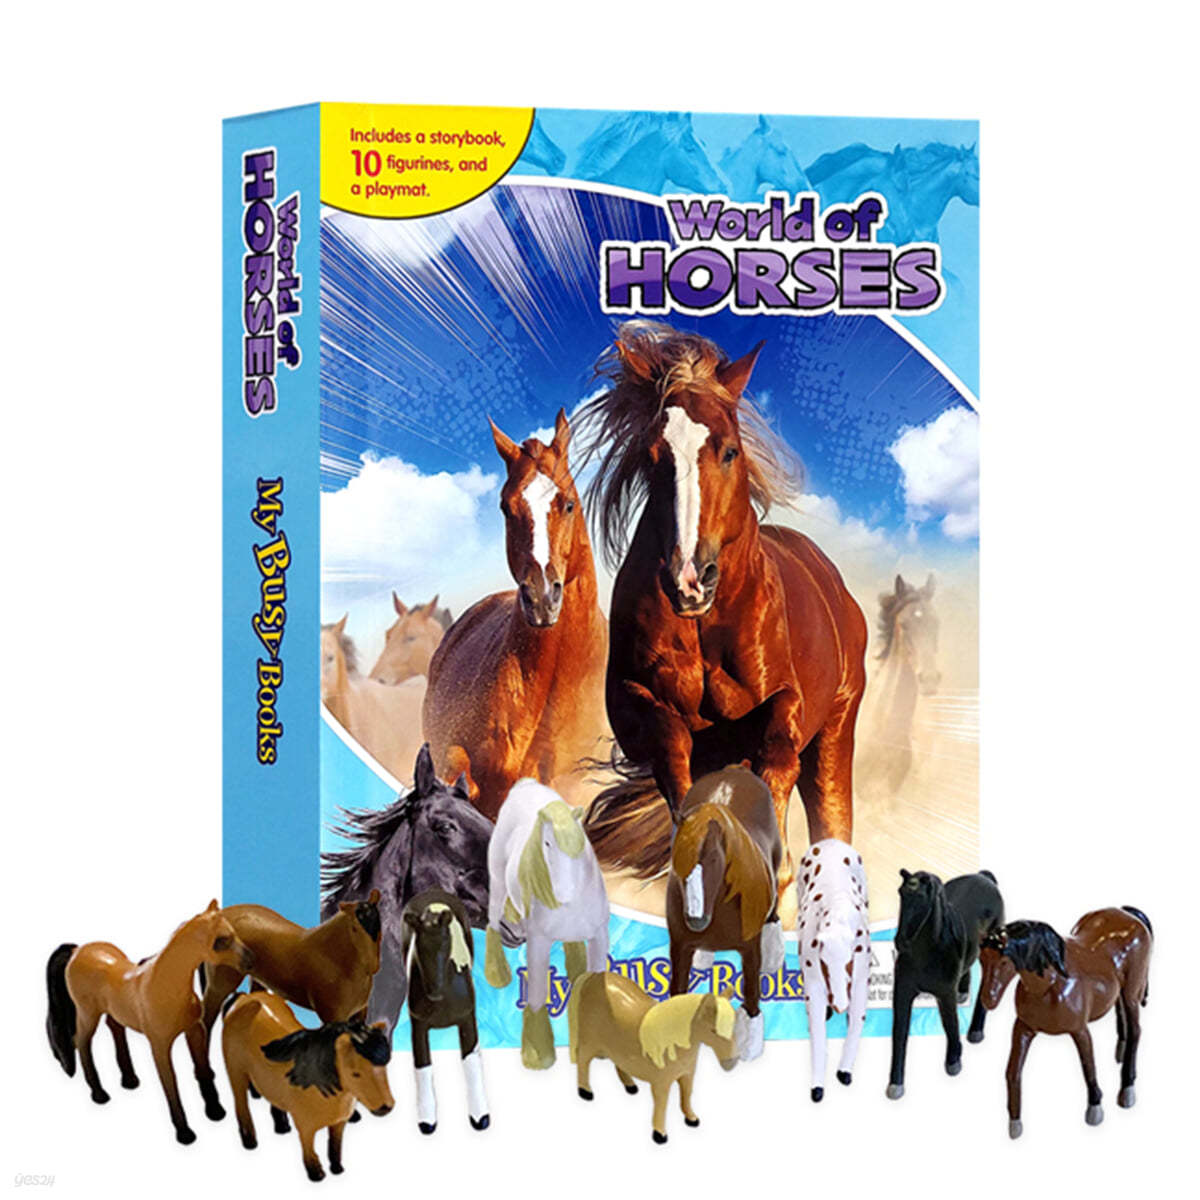 World of horses My Busy Books 월드 오브 홀스 마이 비지북